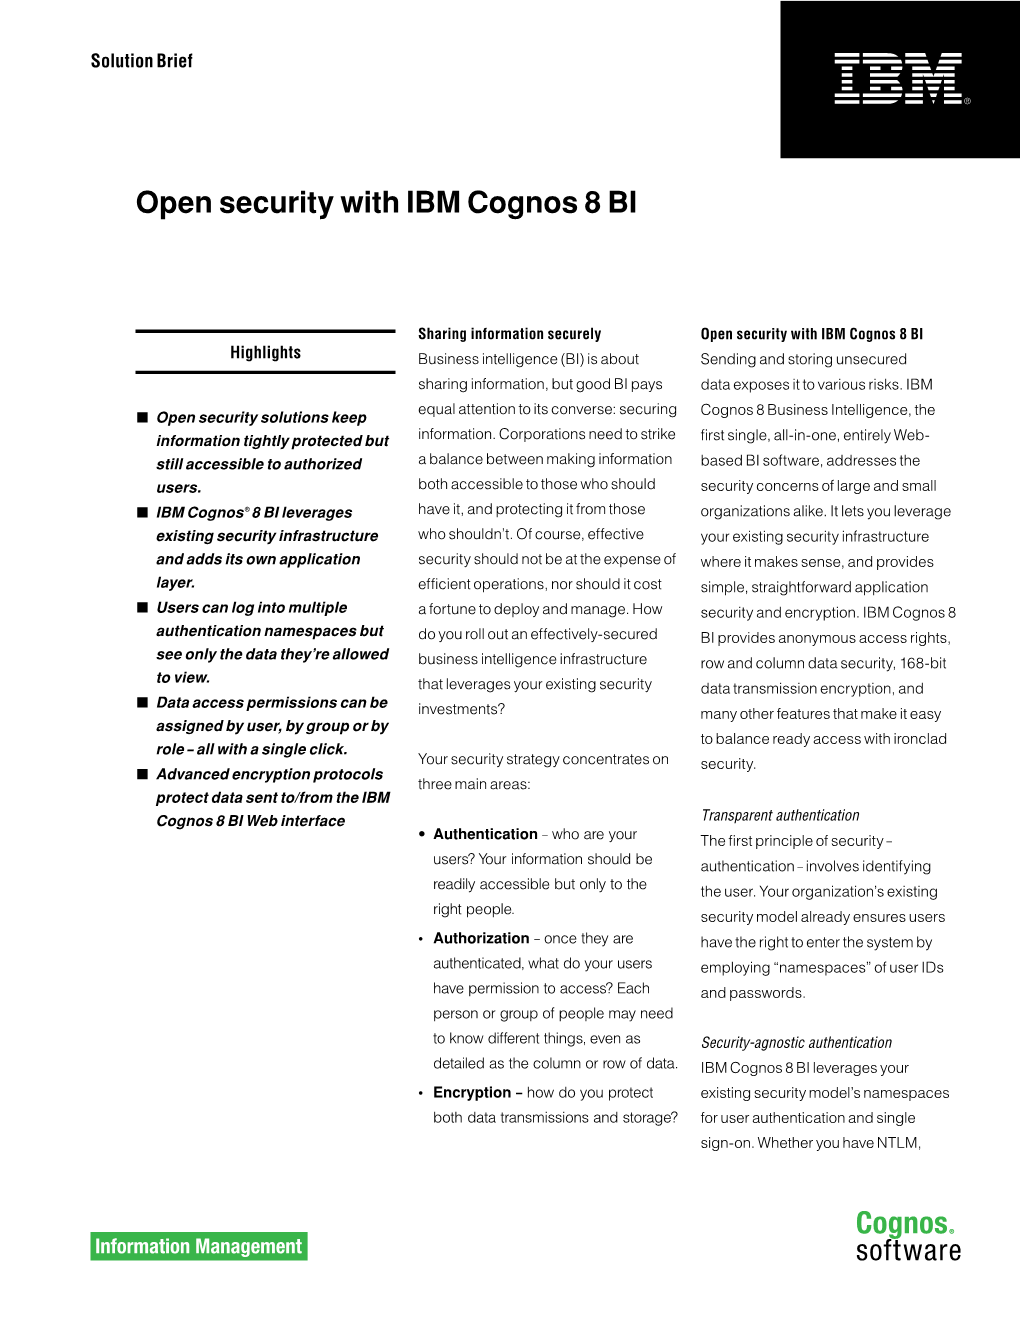 Open Security with IBM Cognos 8 BI